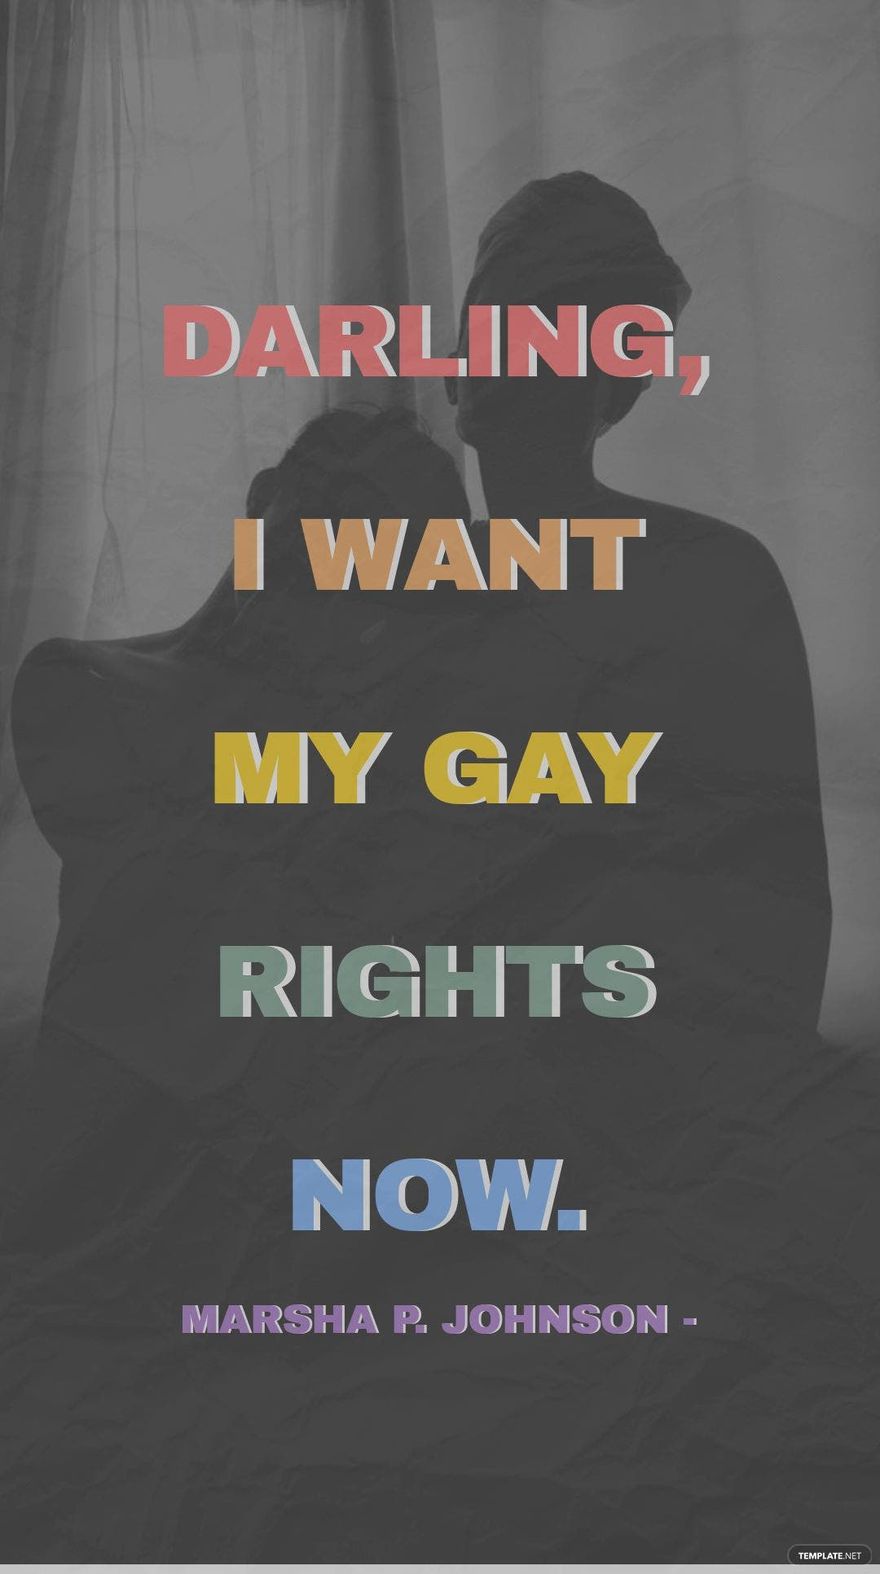 Free Marsha P. Johnson - Darling, I want my gay rights now. in JPG